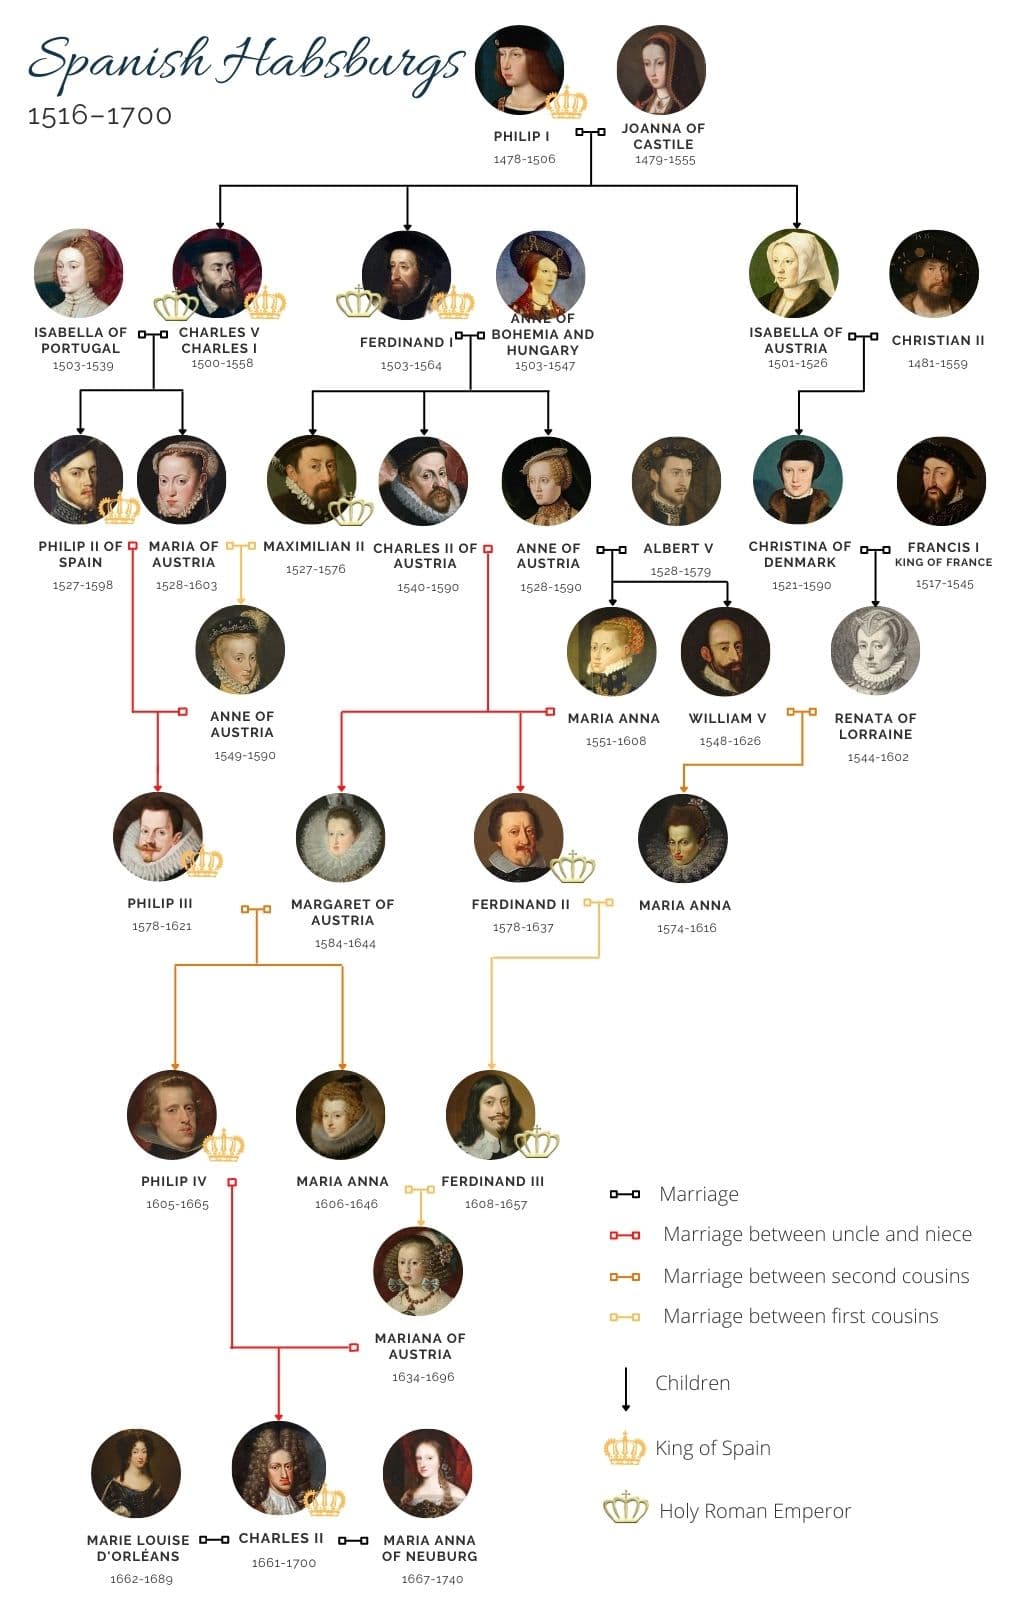 The Spanish Habsburg family tree. (Image: palaces-of-europe.com)